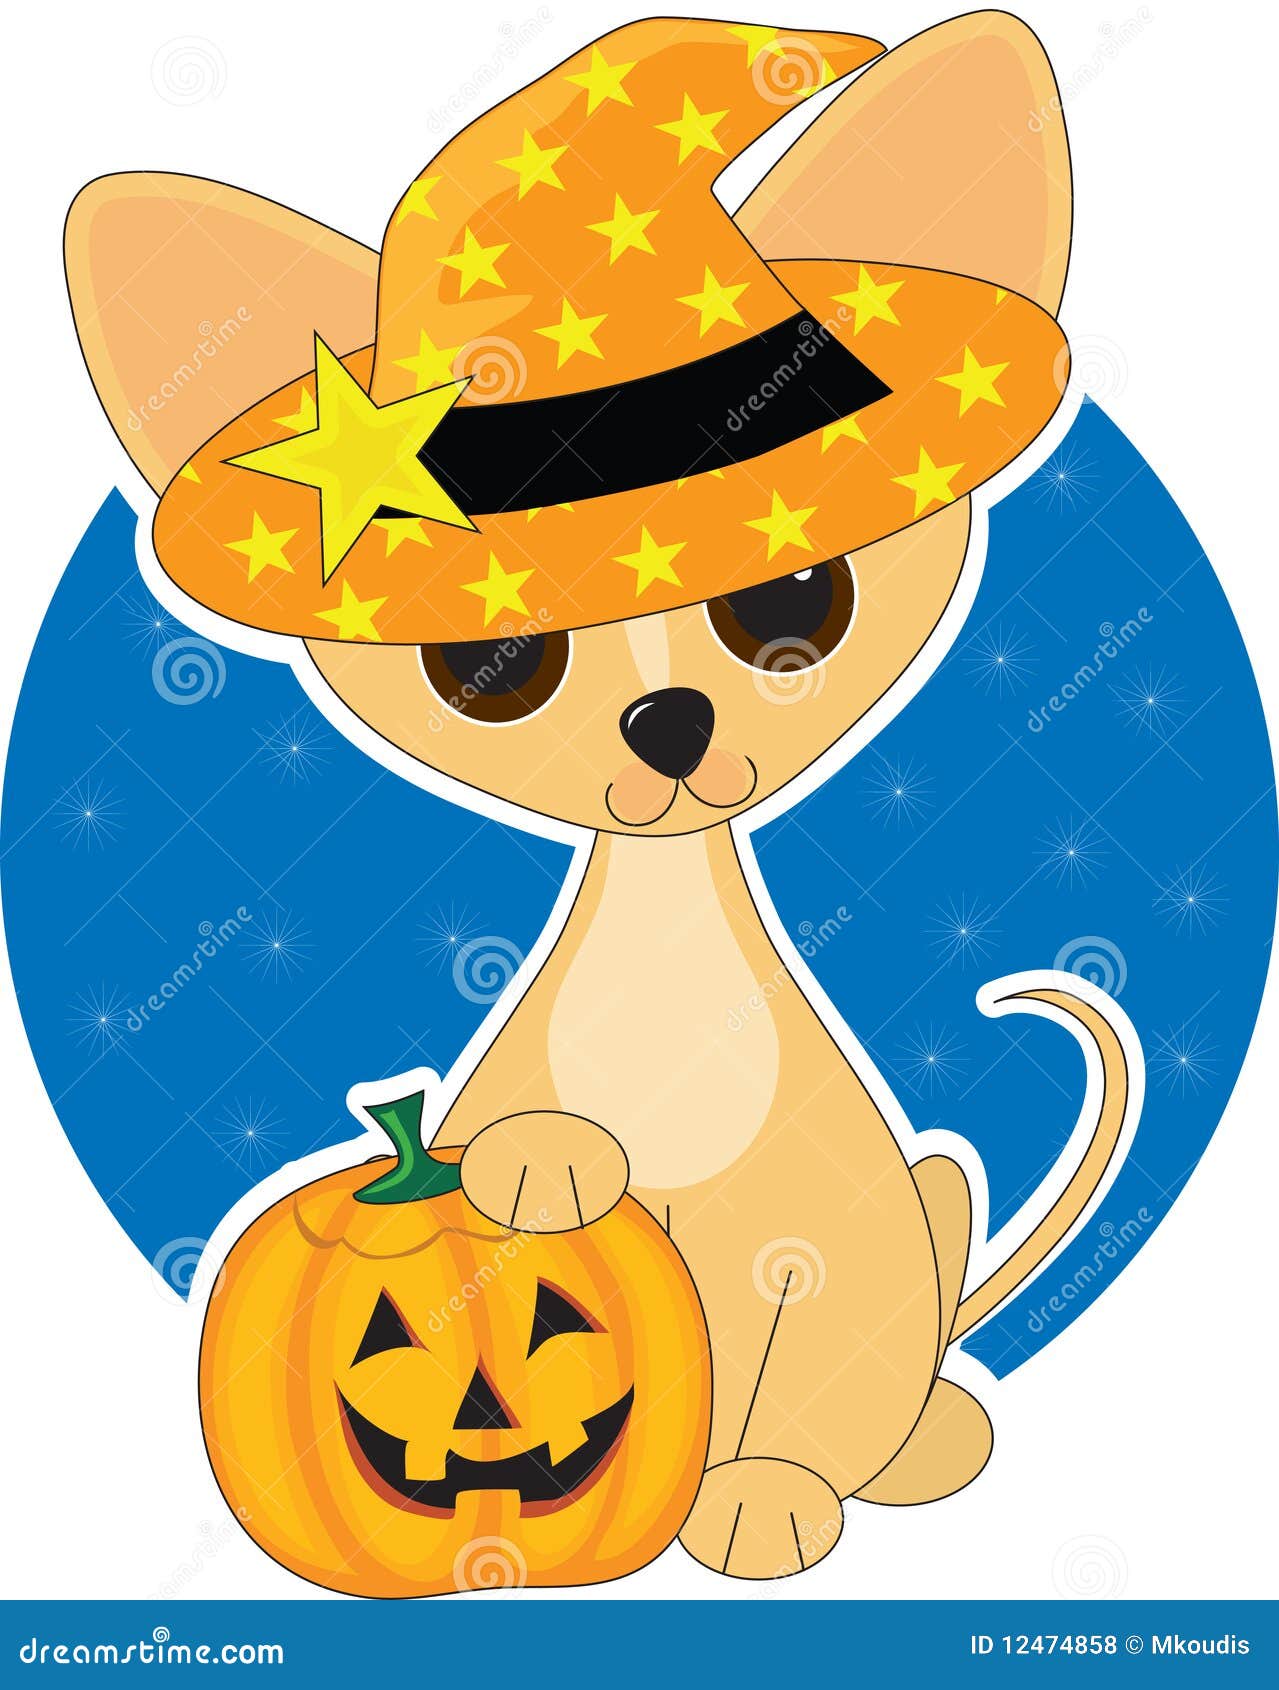 Chihuahua Halloween Royalty Free Stock Photos - Image: 12474858